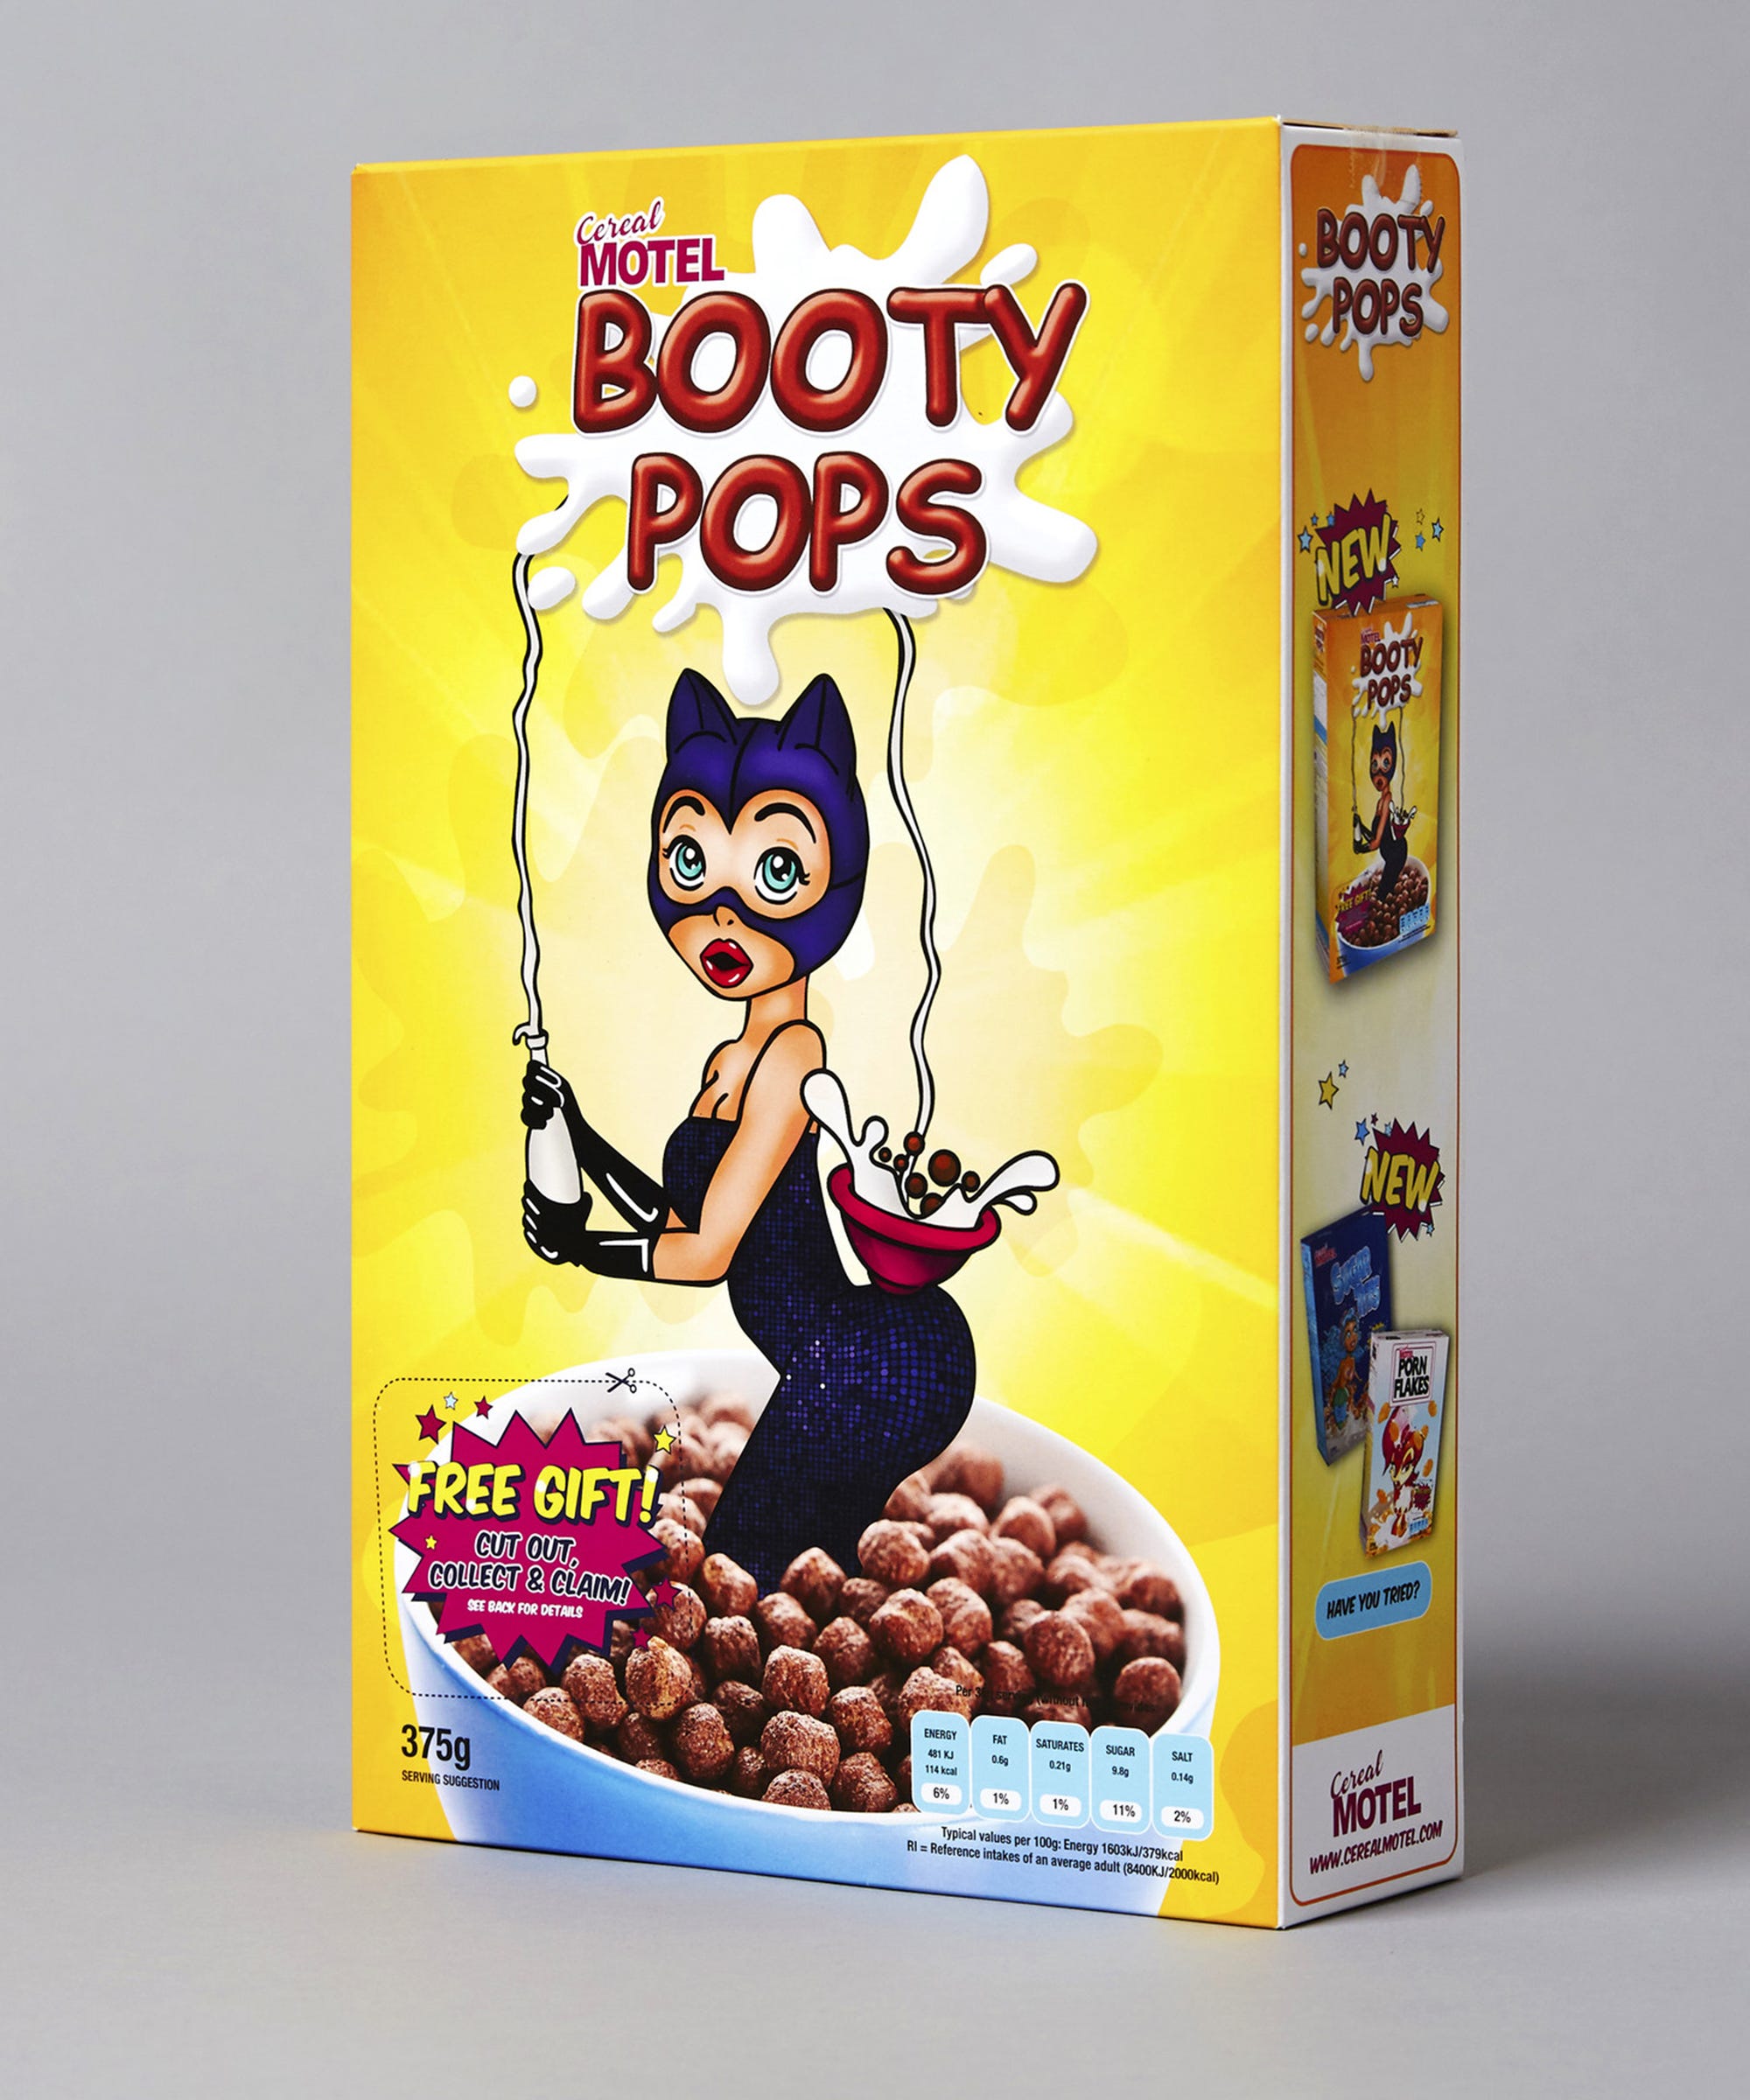 Adult XXX Food Porn Snacks - Sugar Tits Cereal Motel